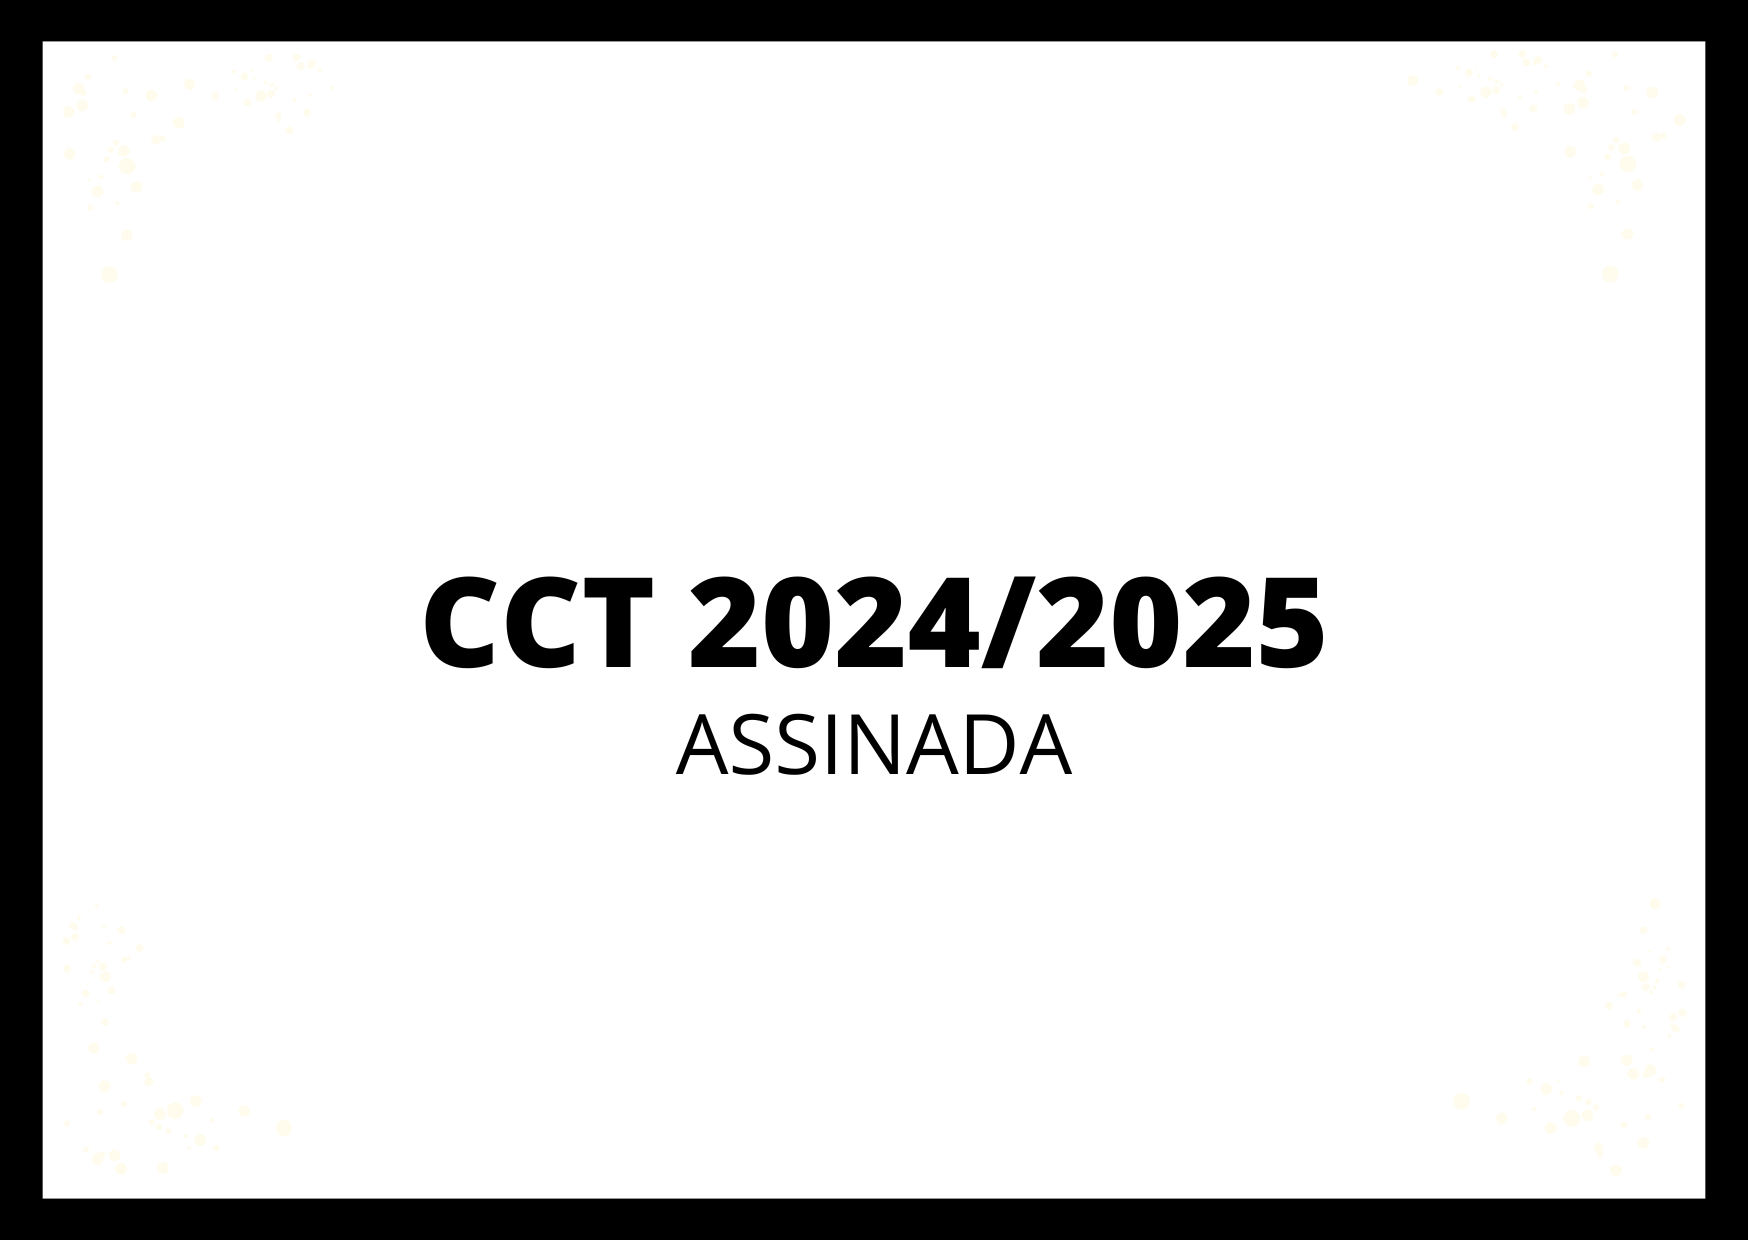 CCT 2024/2025